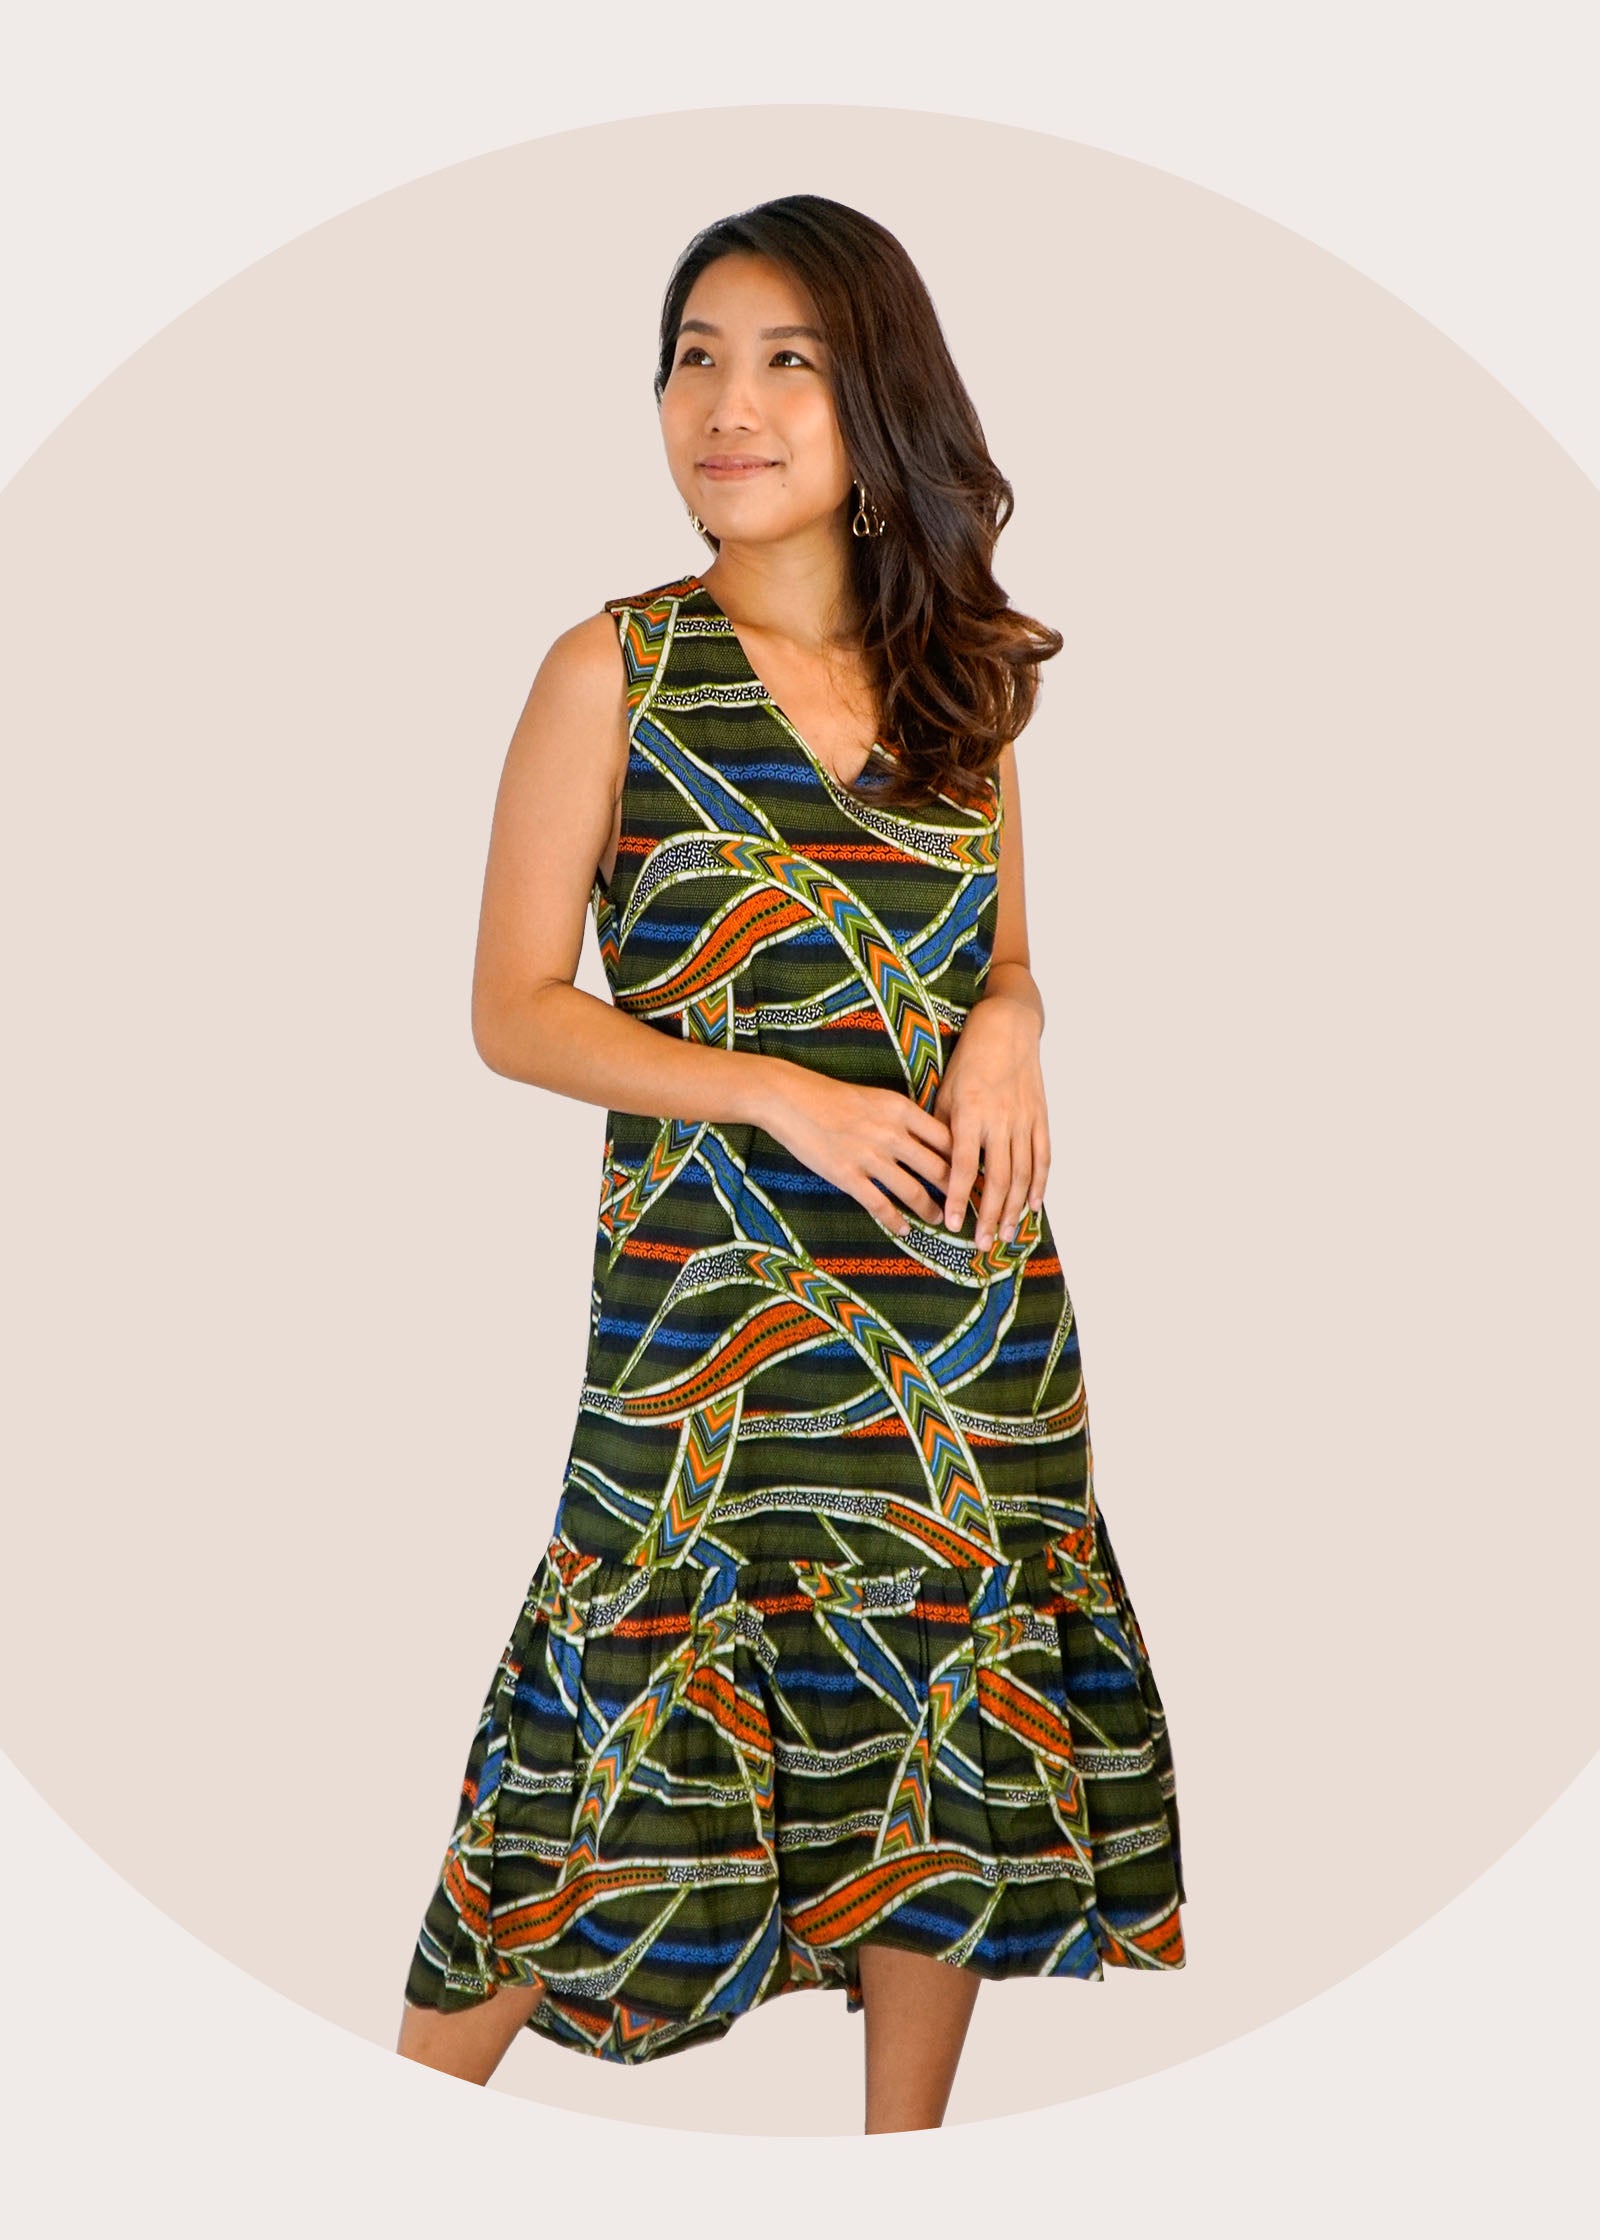 Cindy Ruffle Batik Dress in Slices